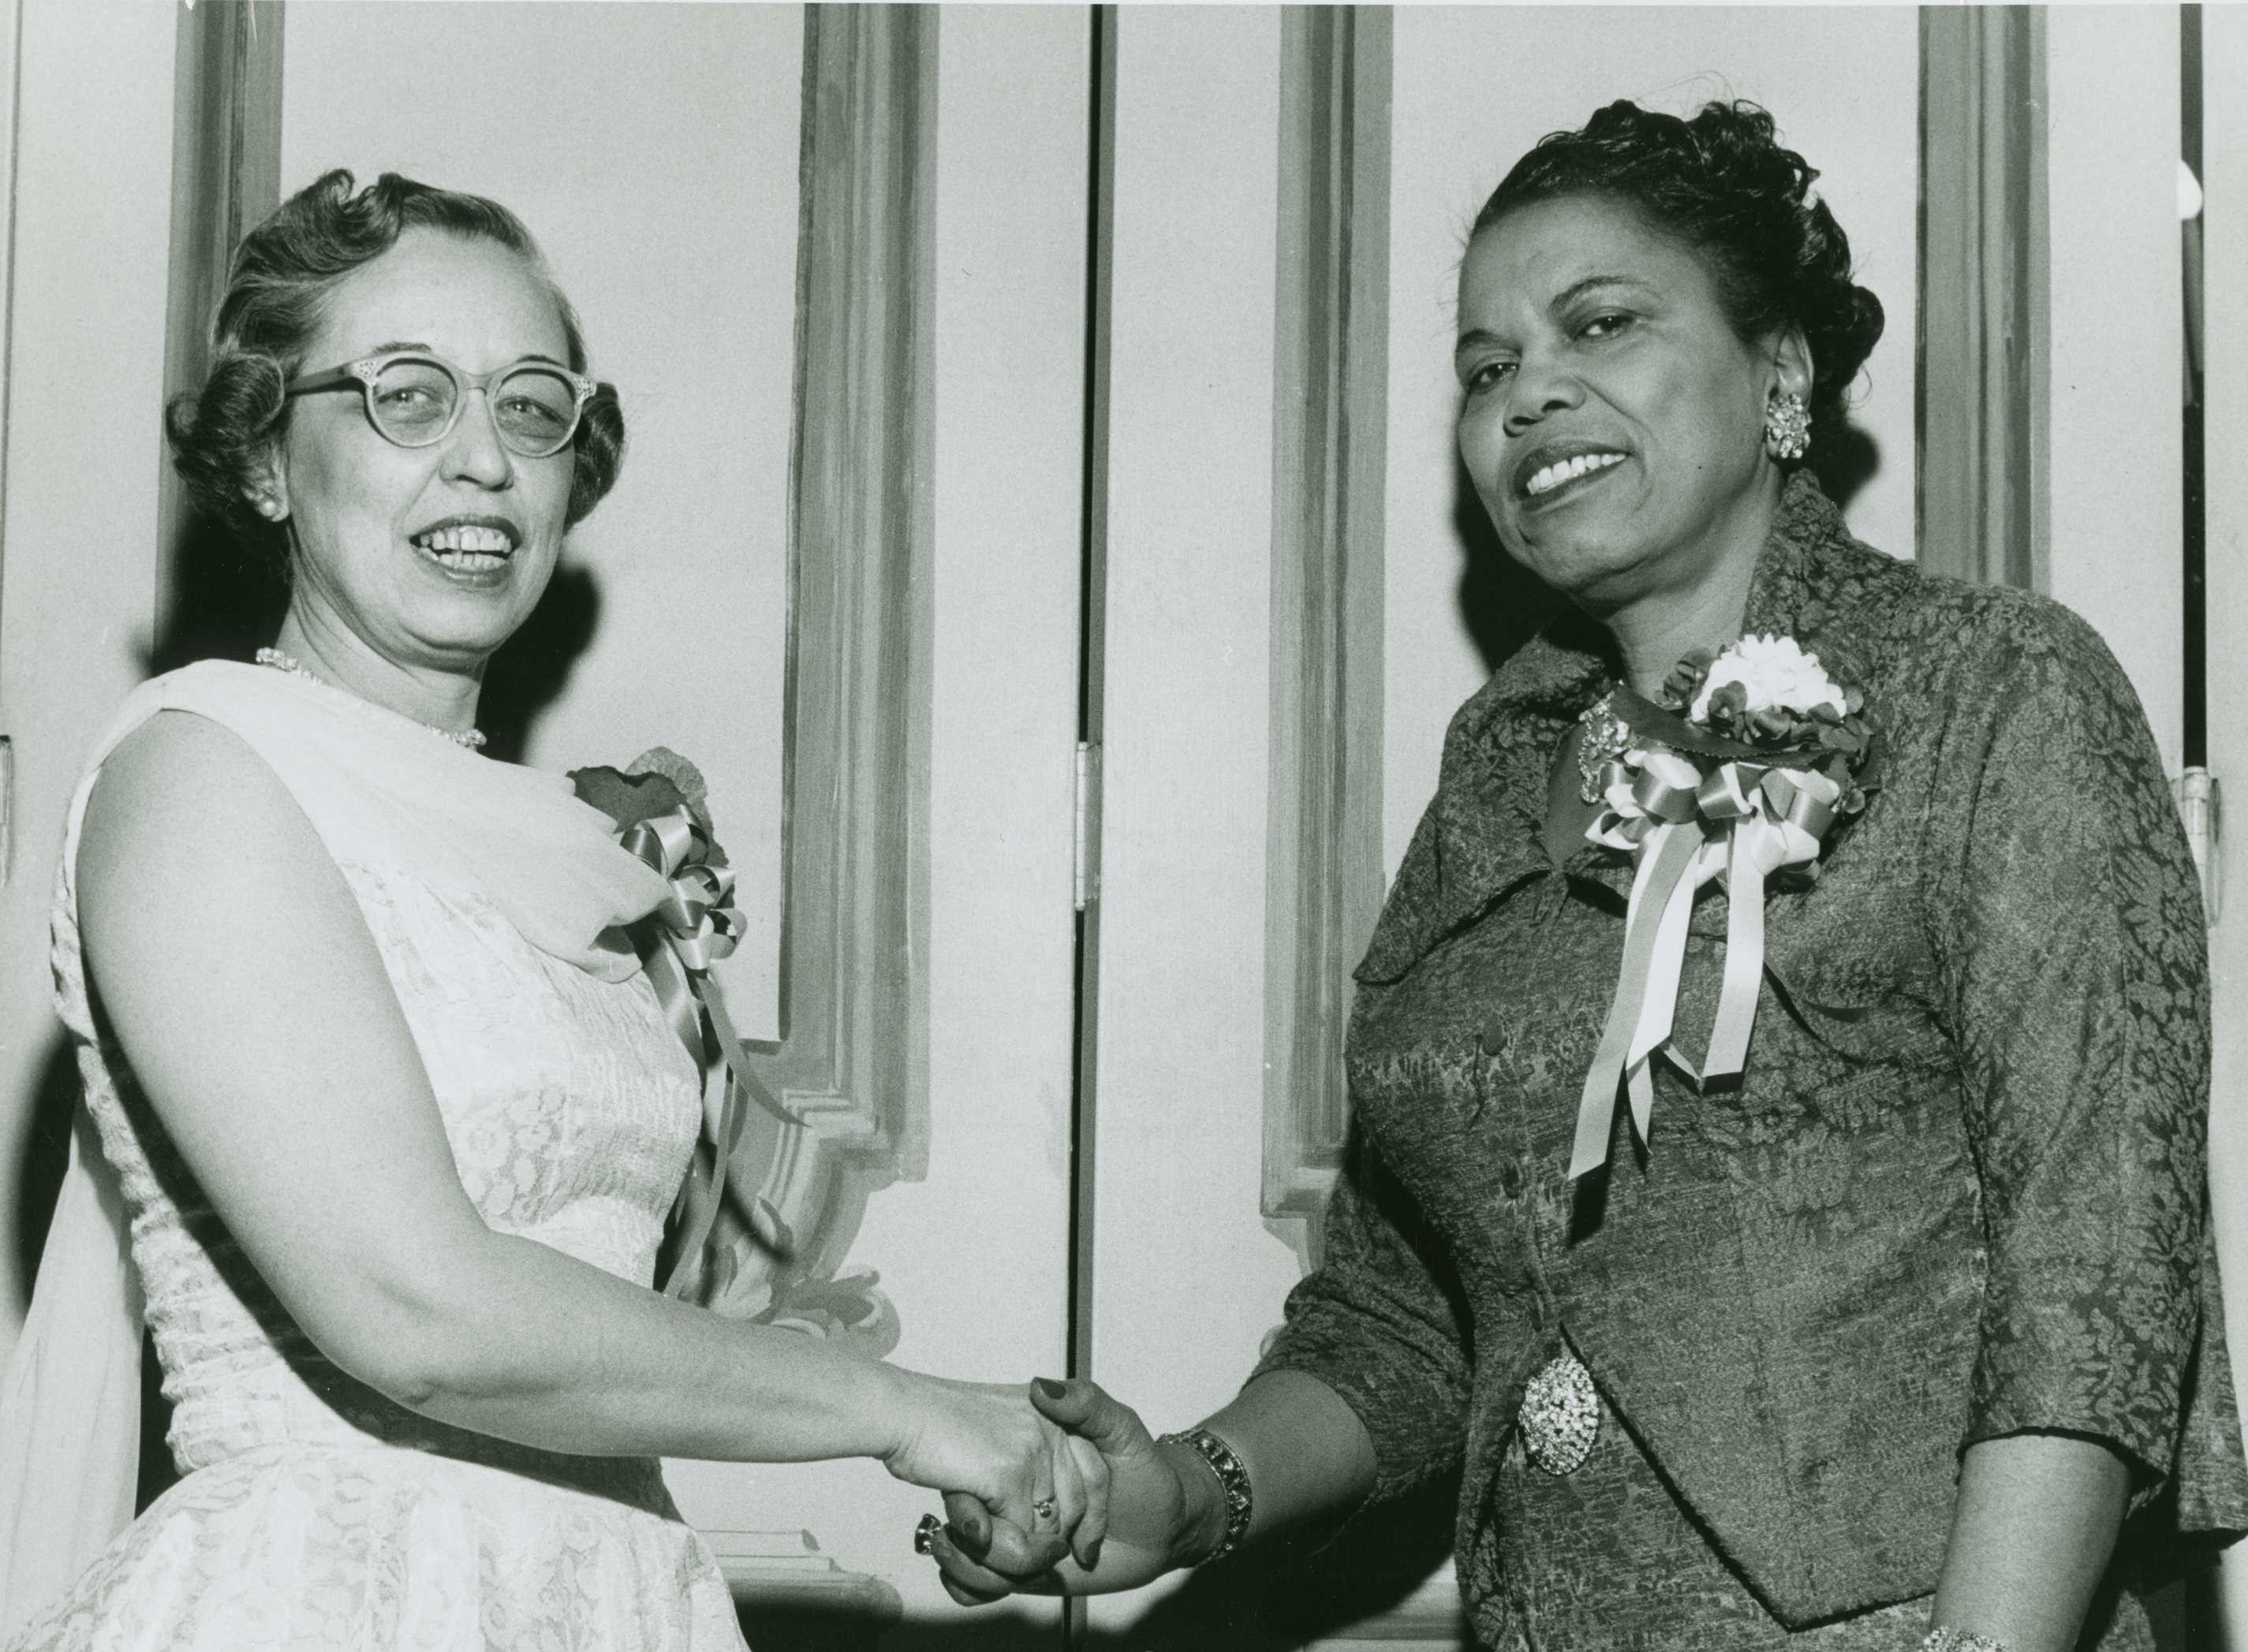 Osborne receives NYU's Nurse of the Year Award in 1959